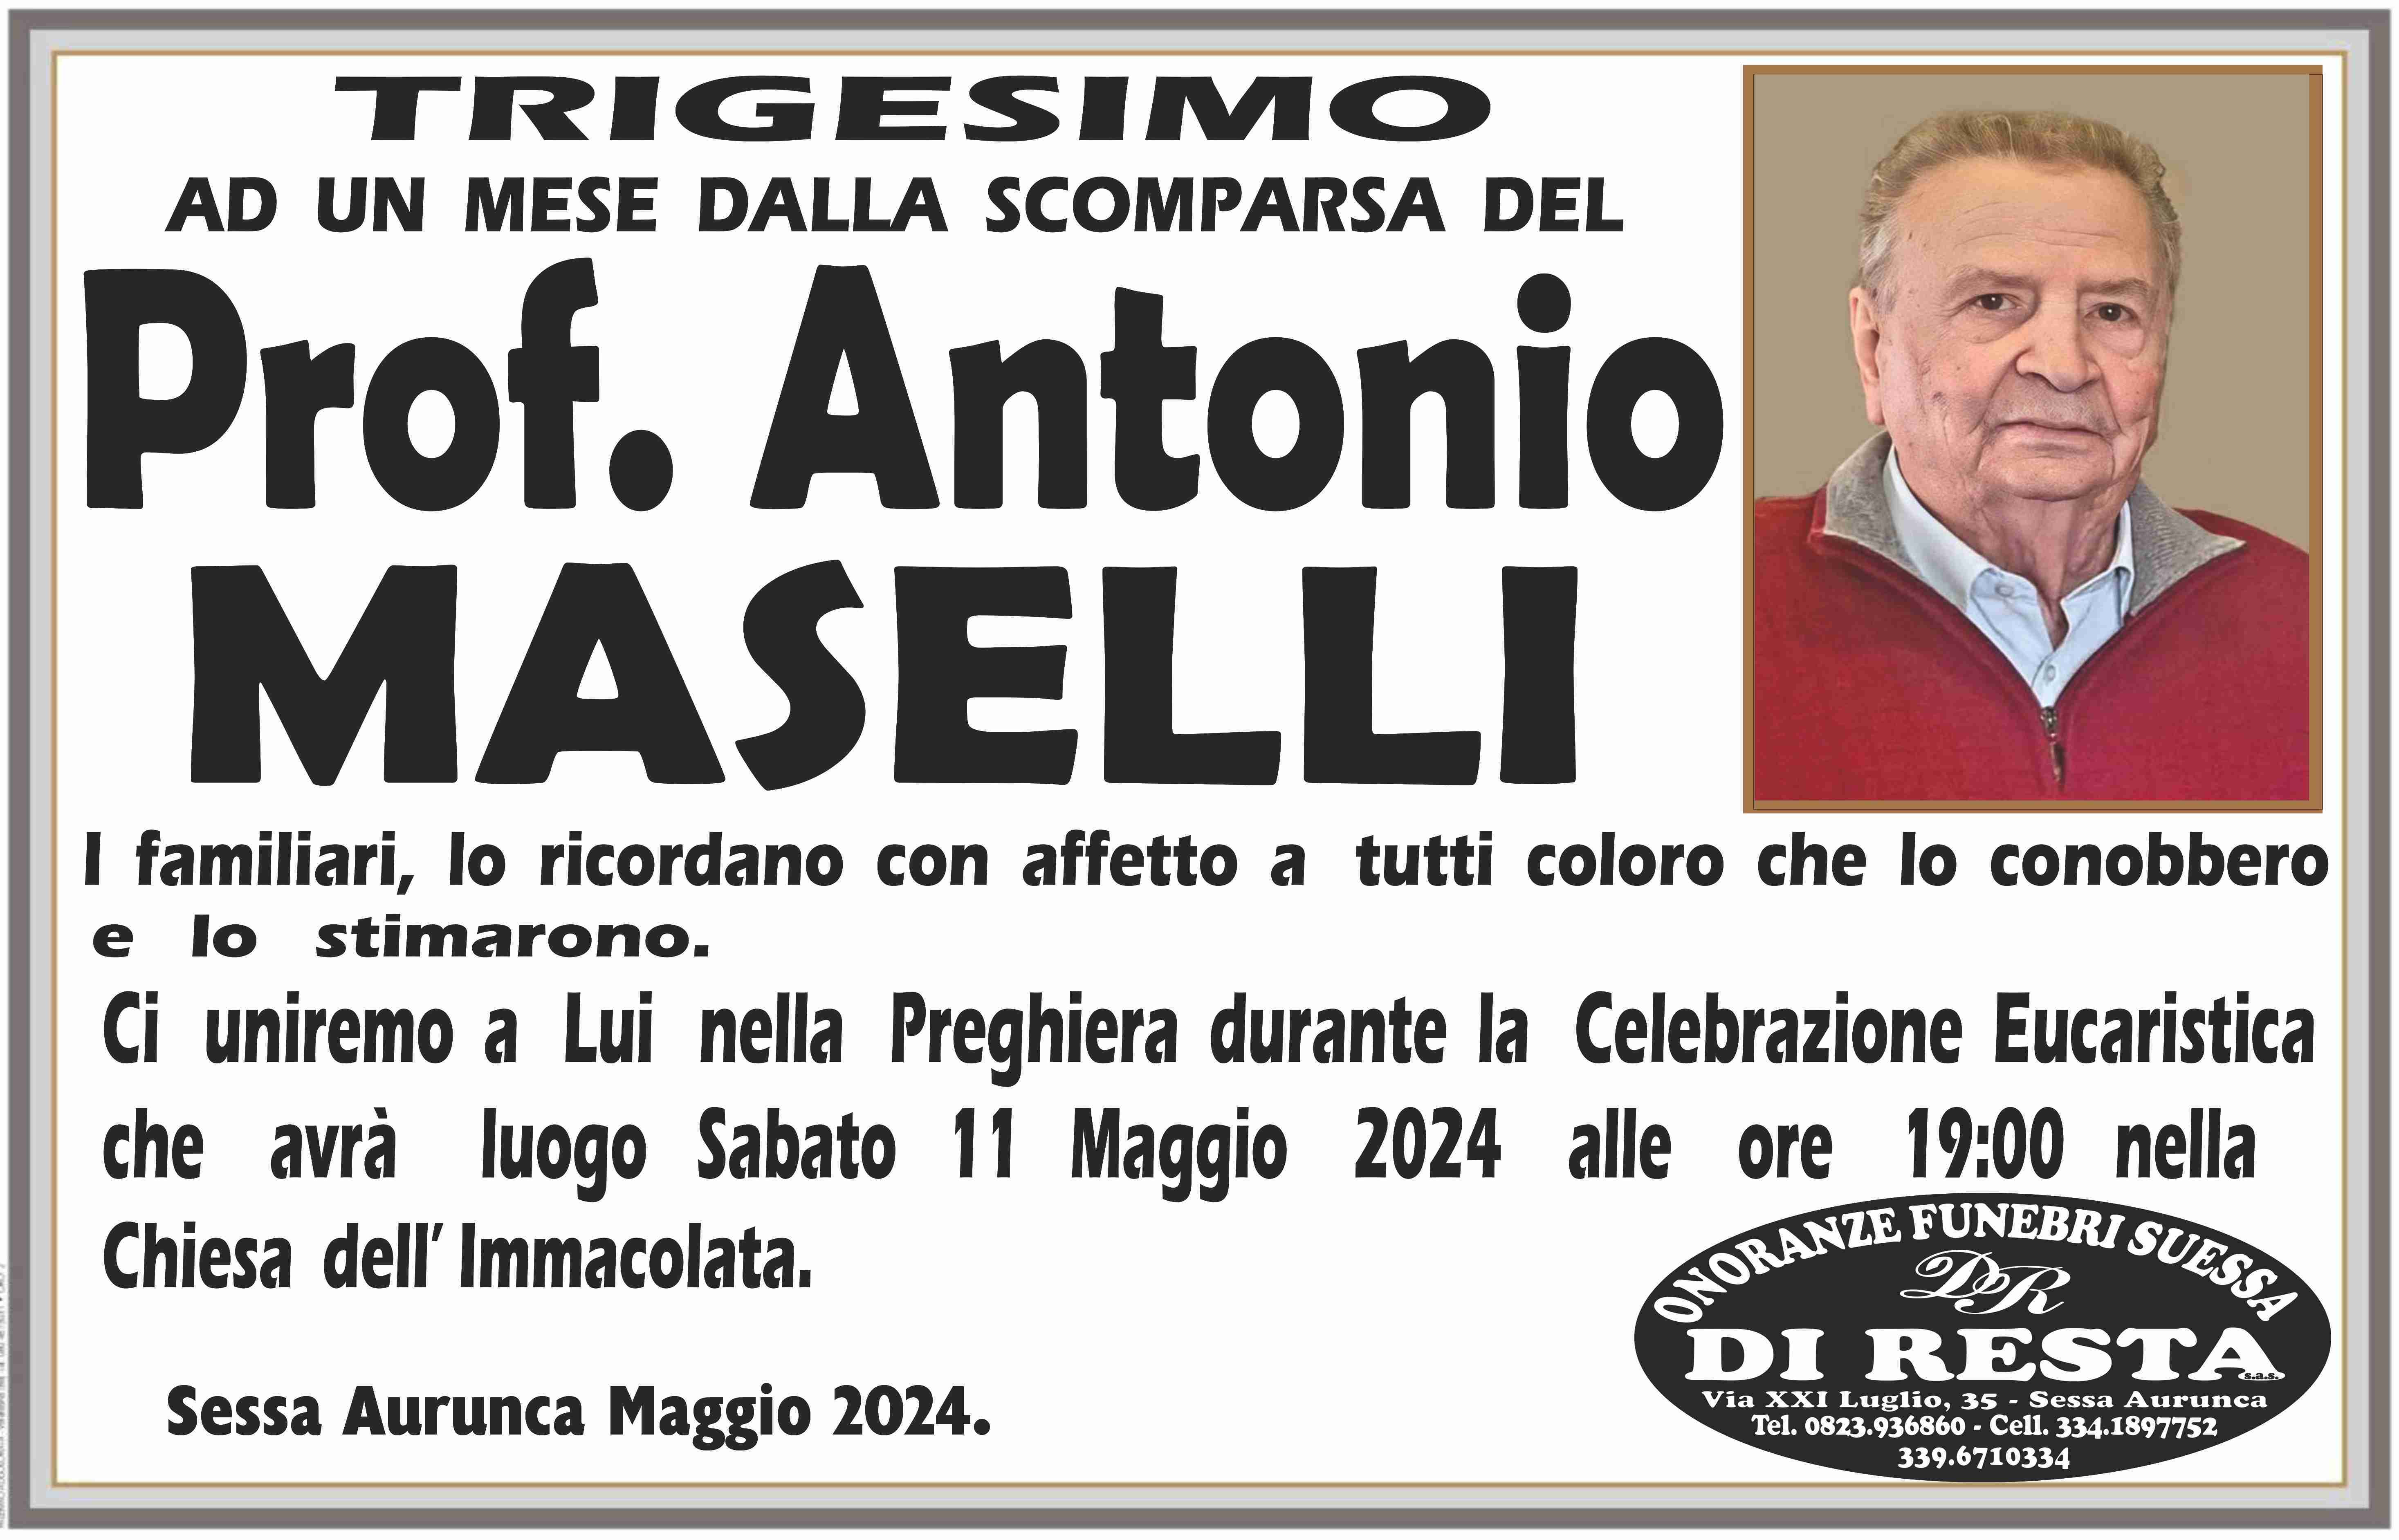 Prof. Antonio Maselli